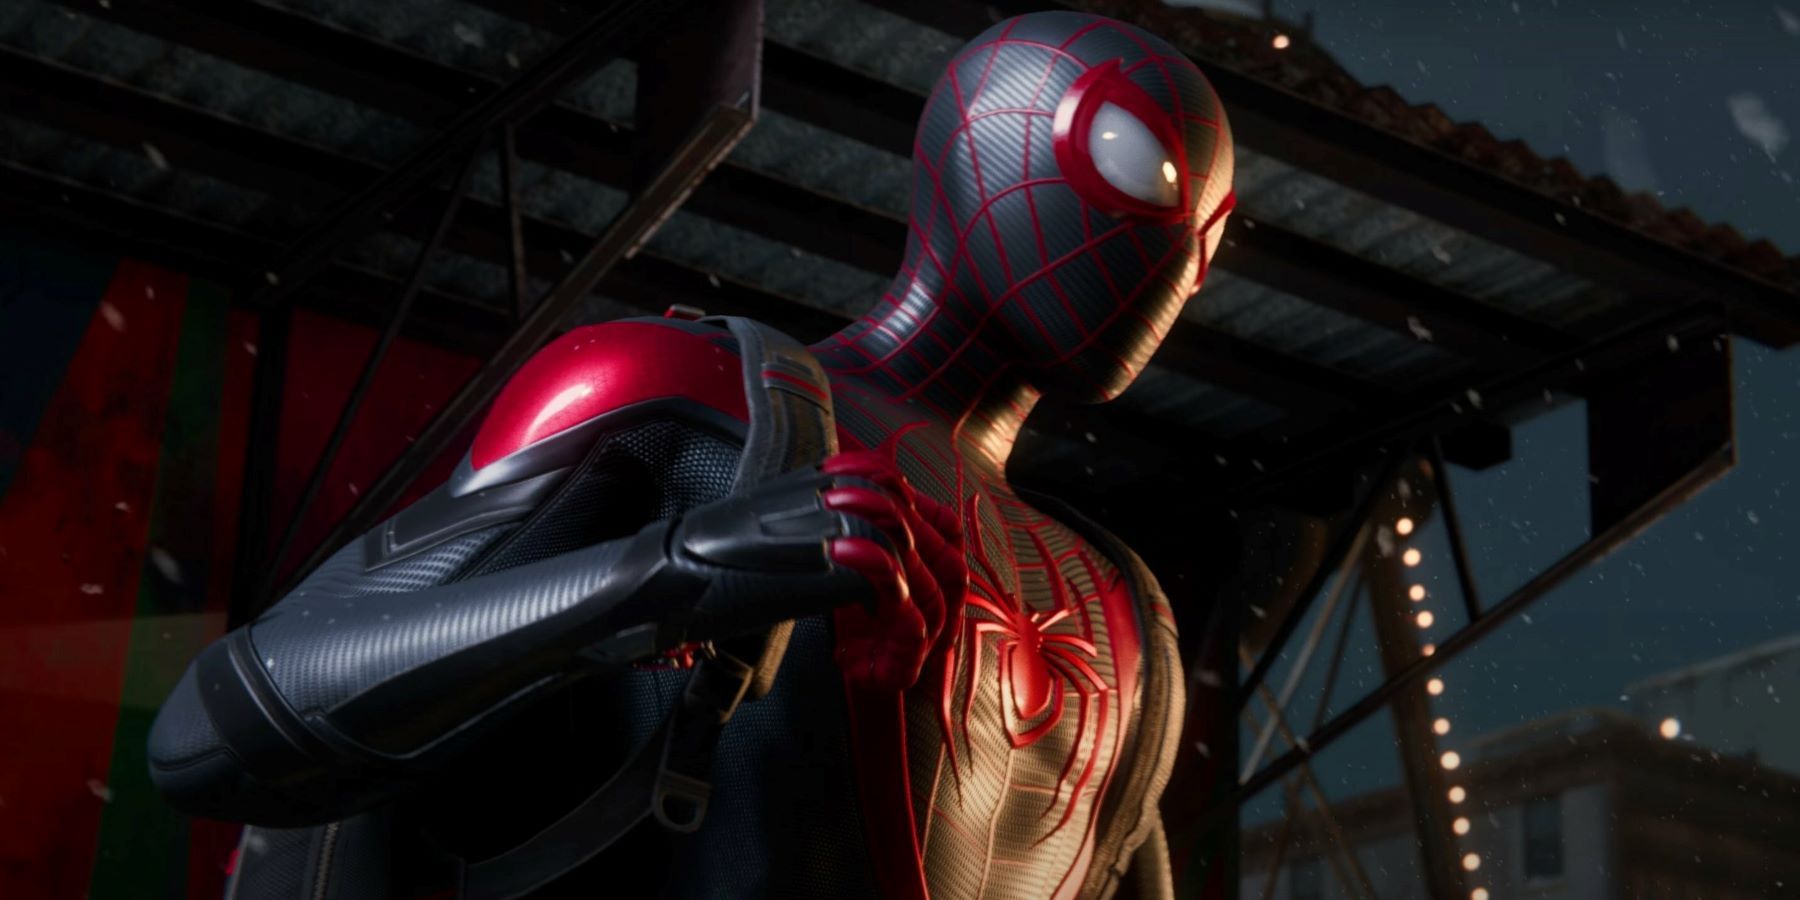 Marvel's Spider-Man Miles Morales chegará ao PC em 2022